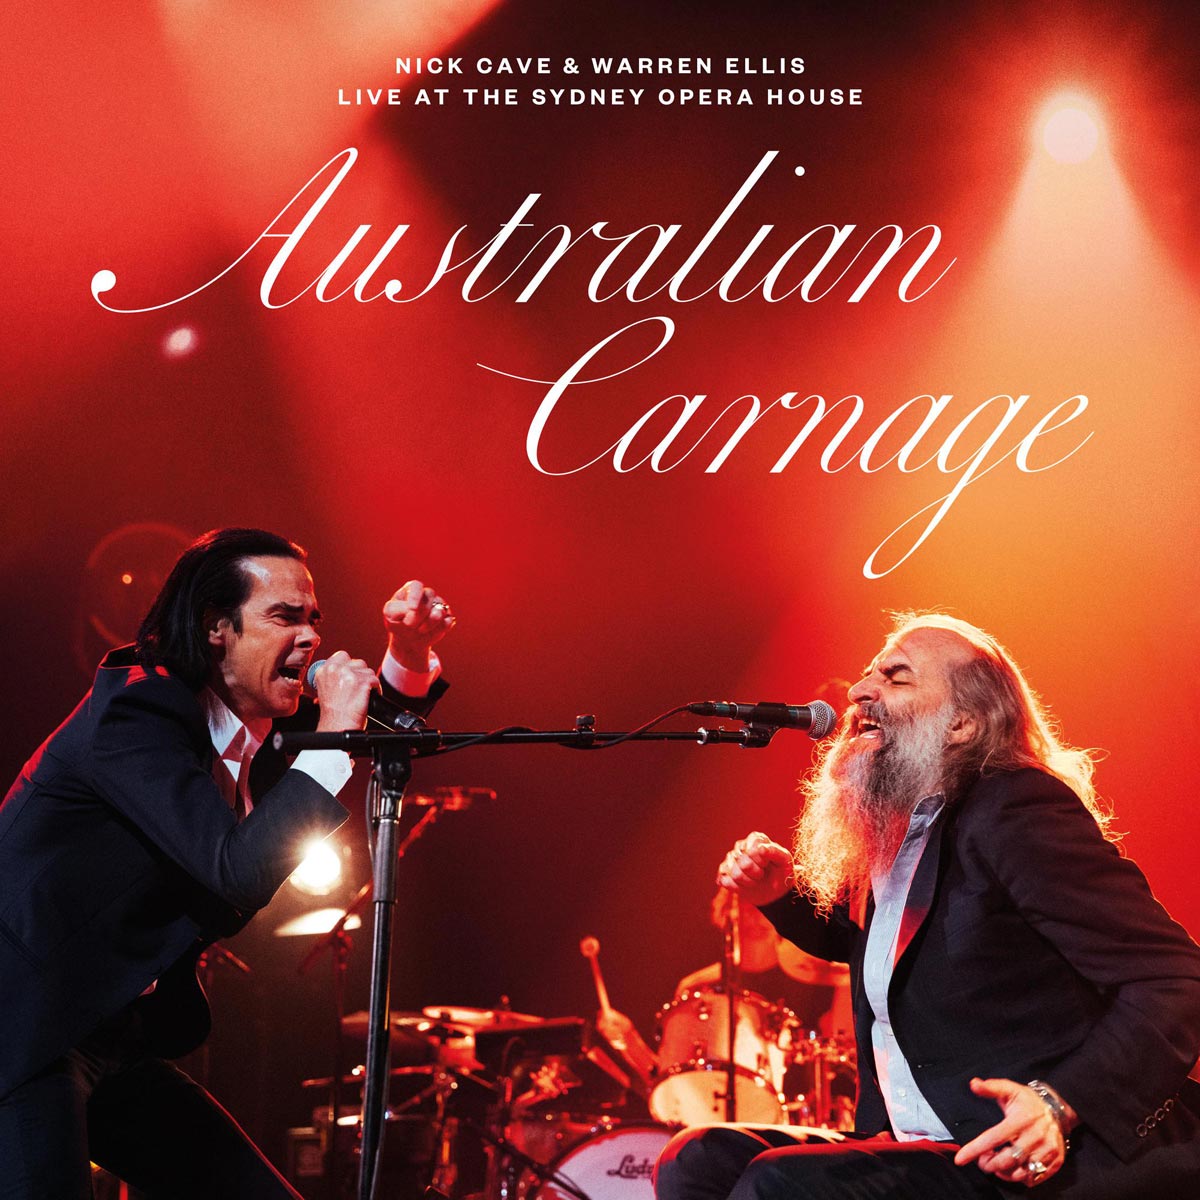 Nick Cave & Warren Ellis - Australian Carnage - Live At The Sydney Opera House -